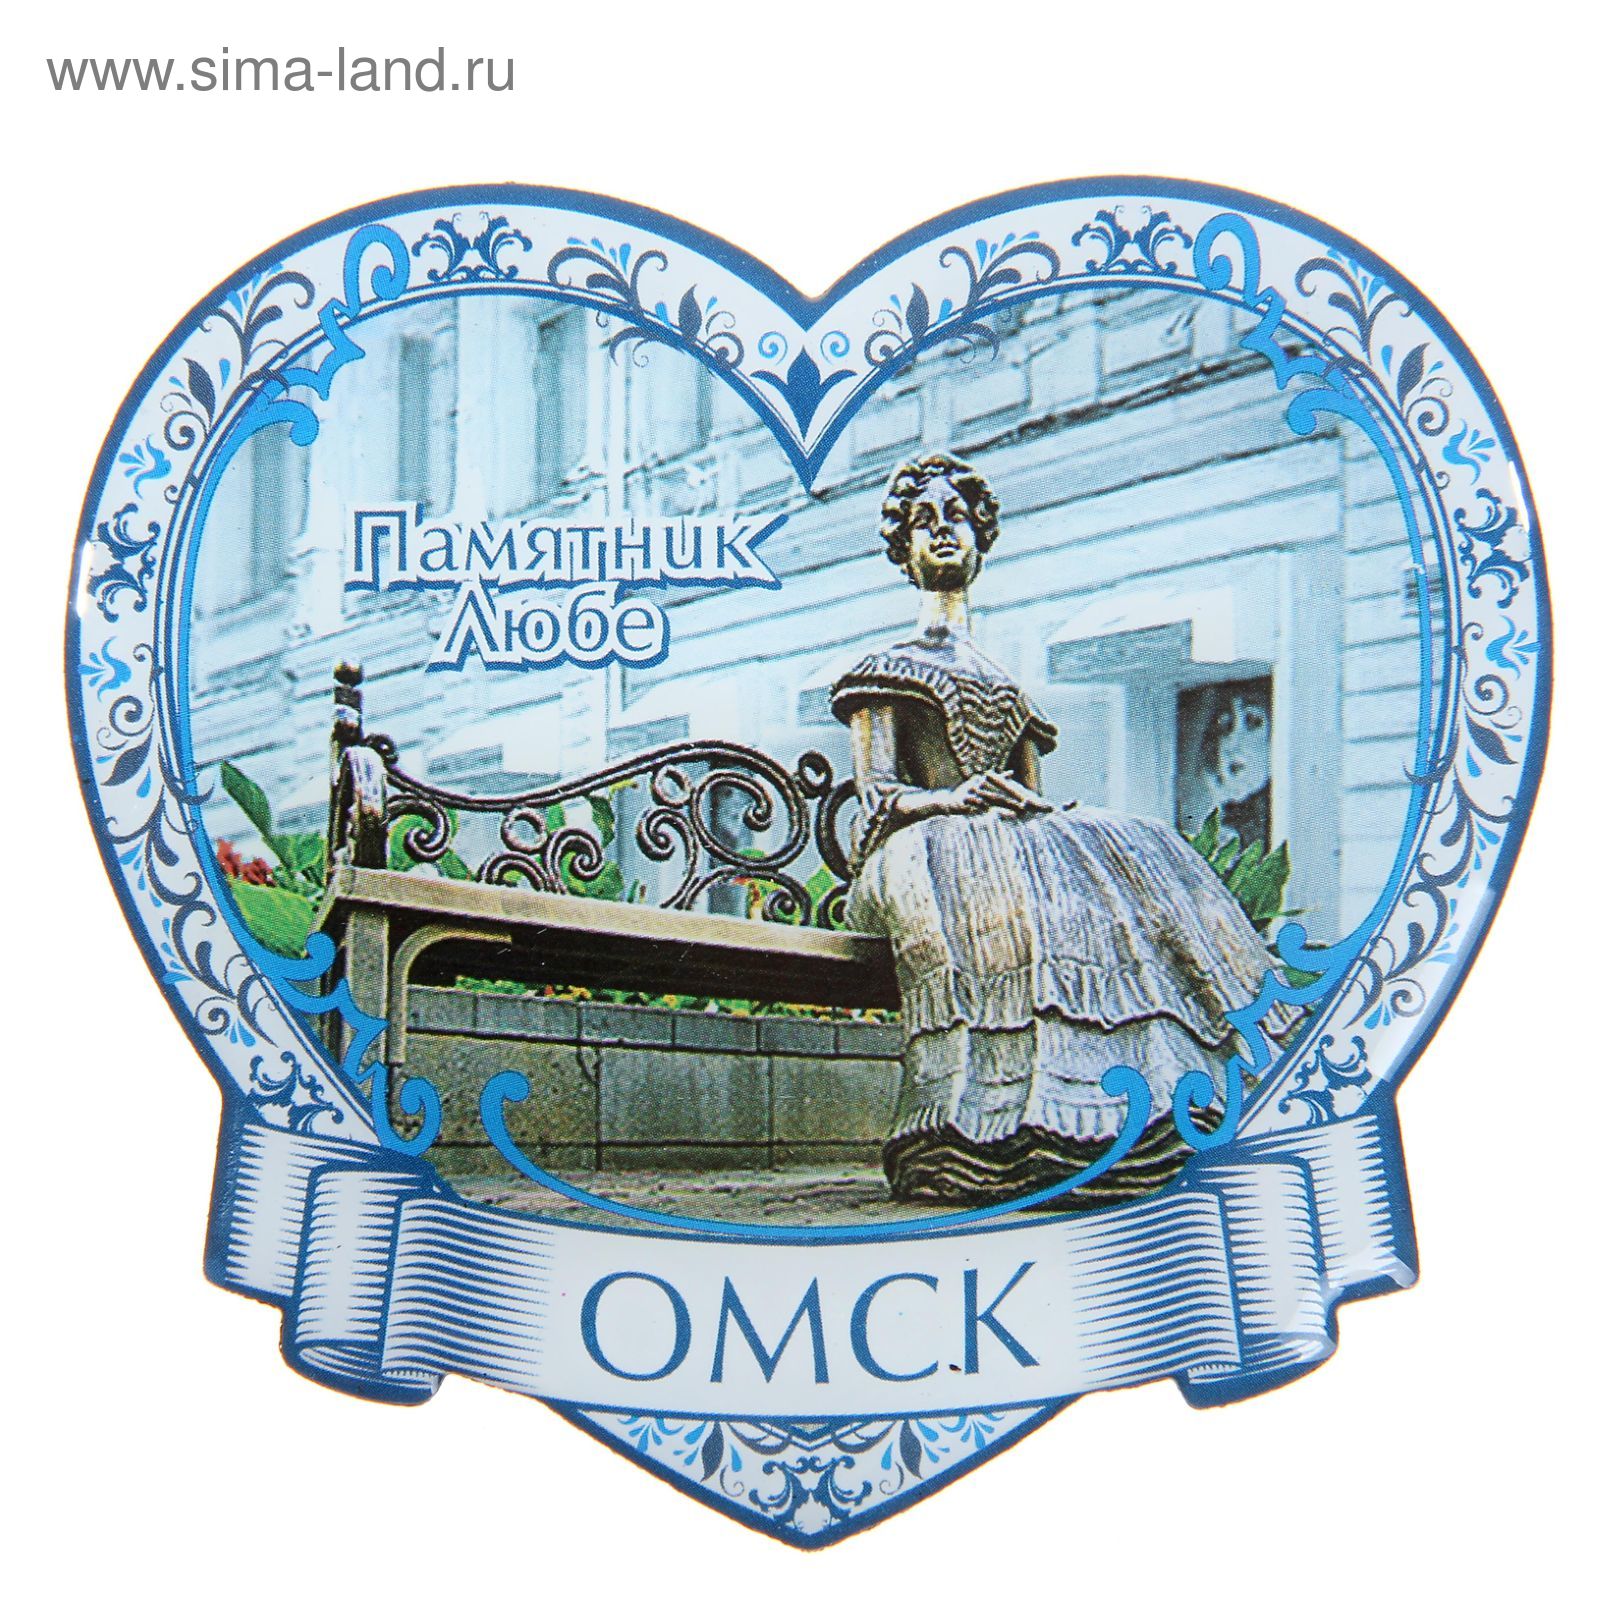 Символ города Омска